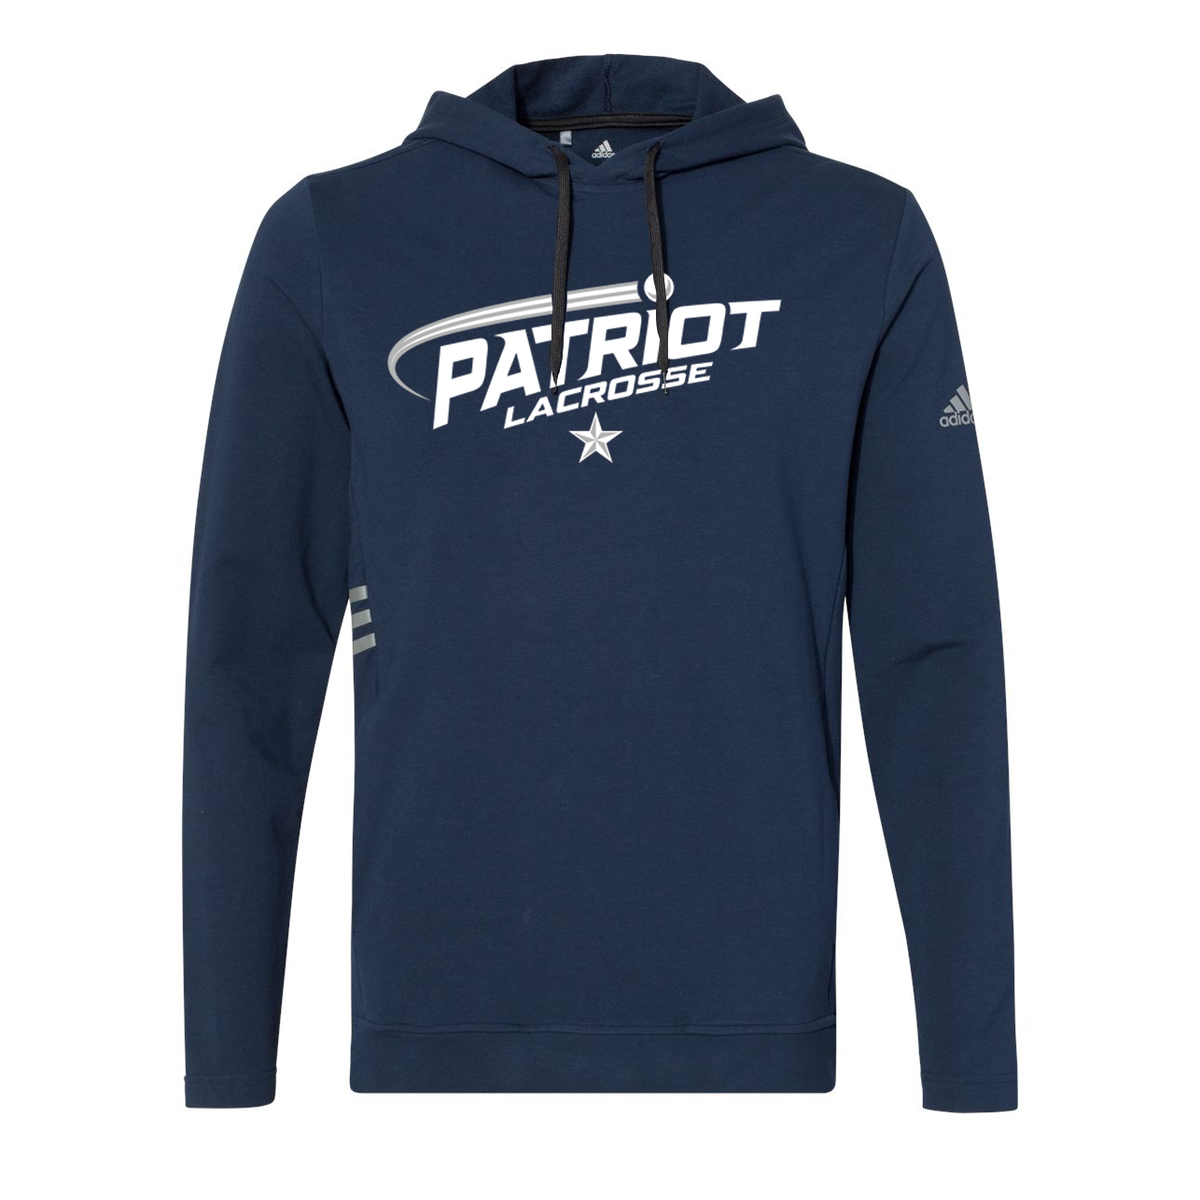 Patriot Lacrosse Adidas Sweatshirt